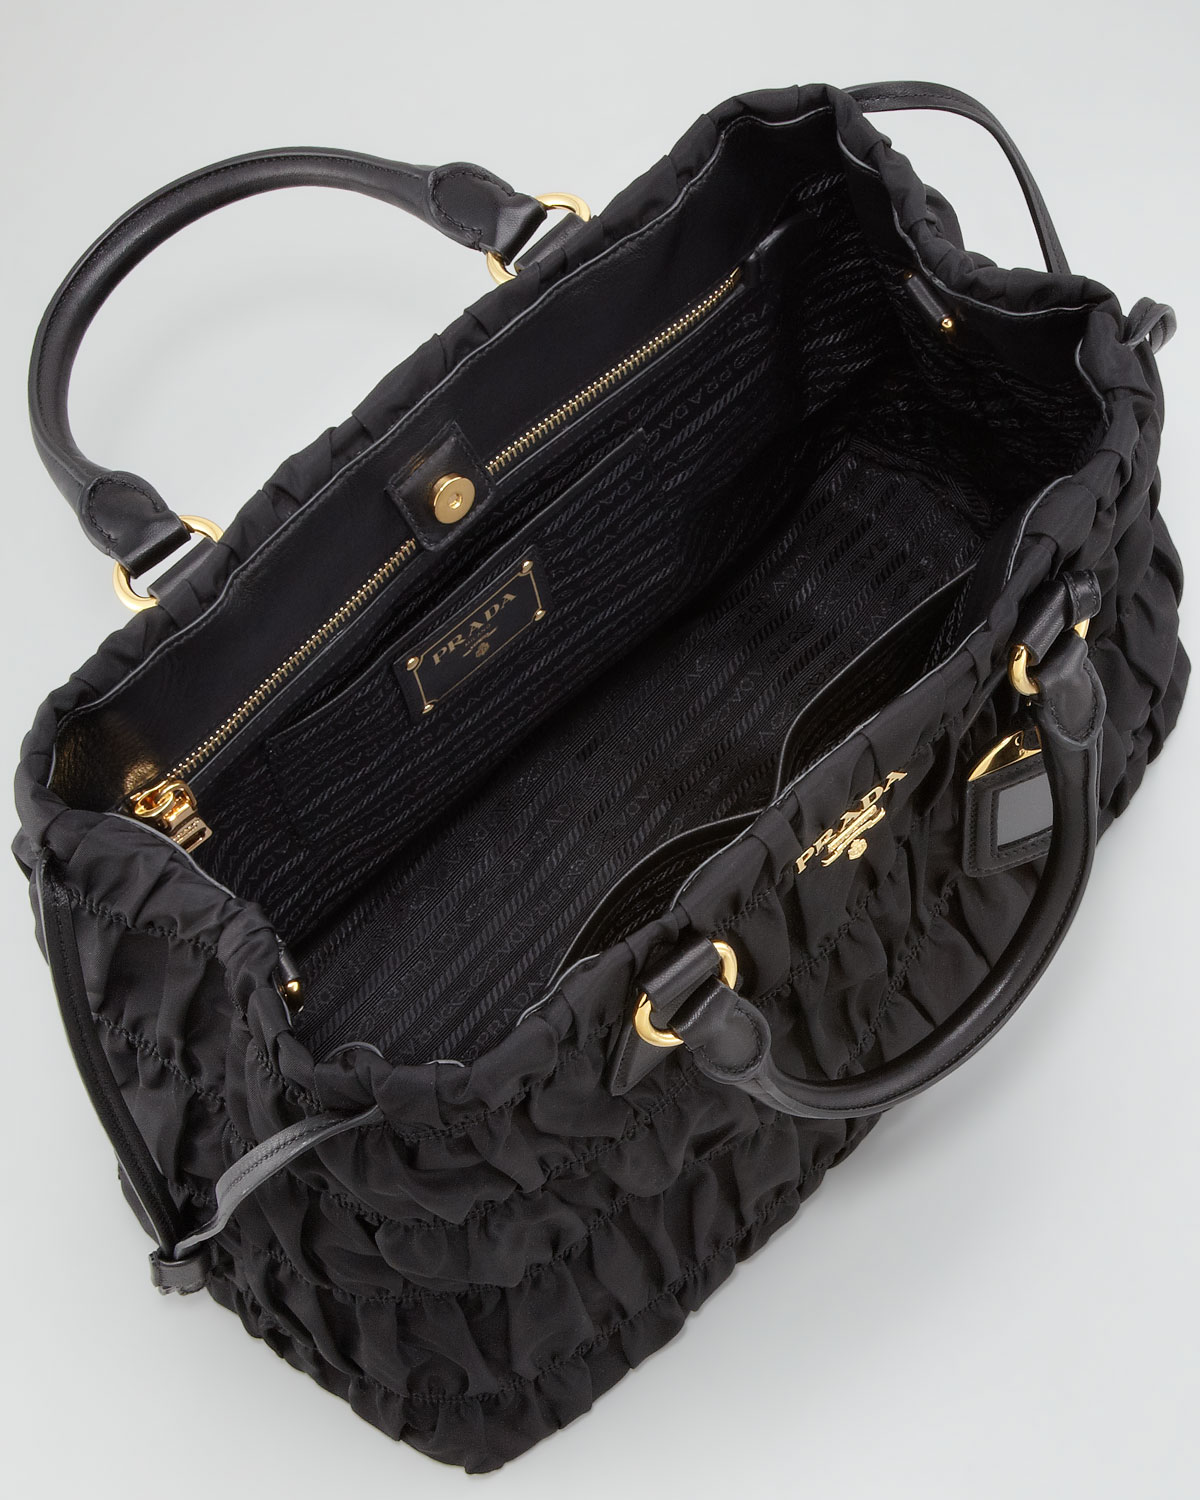 Lyst - Prada Large Gaufre Nylon Tote Bag in Black